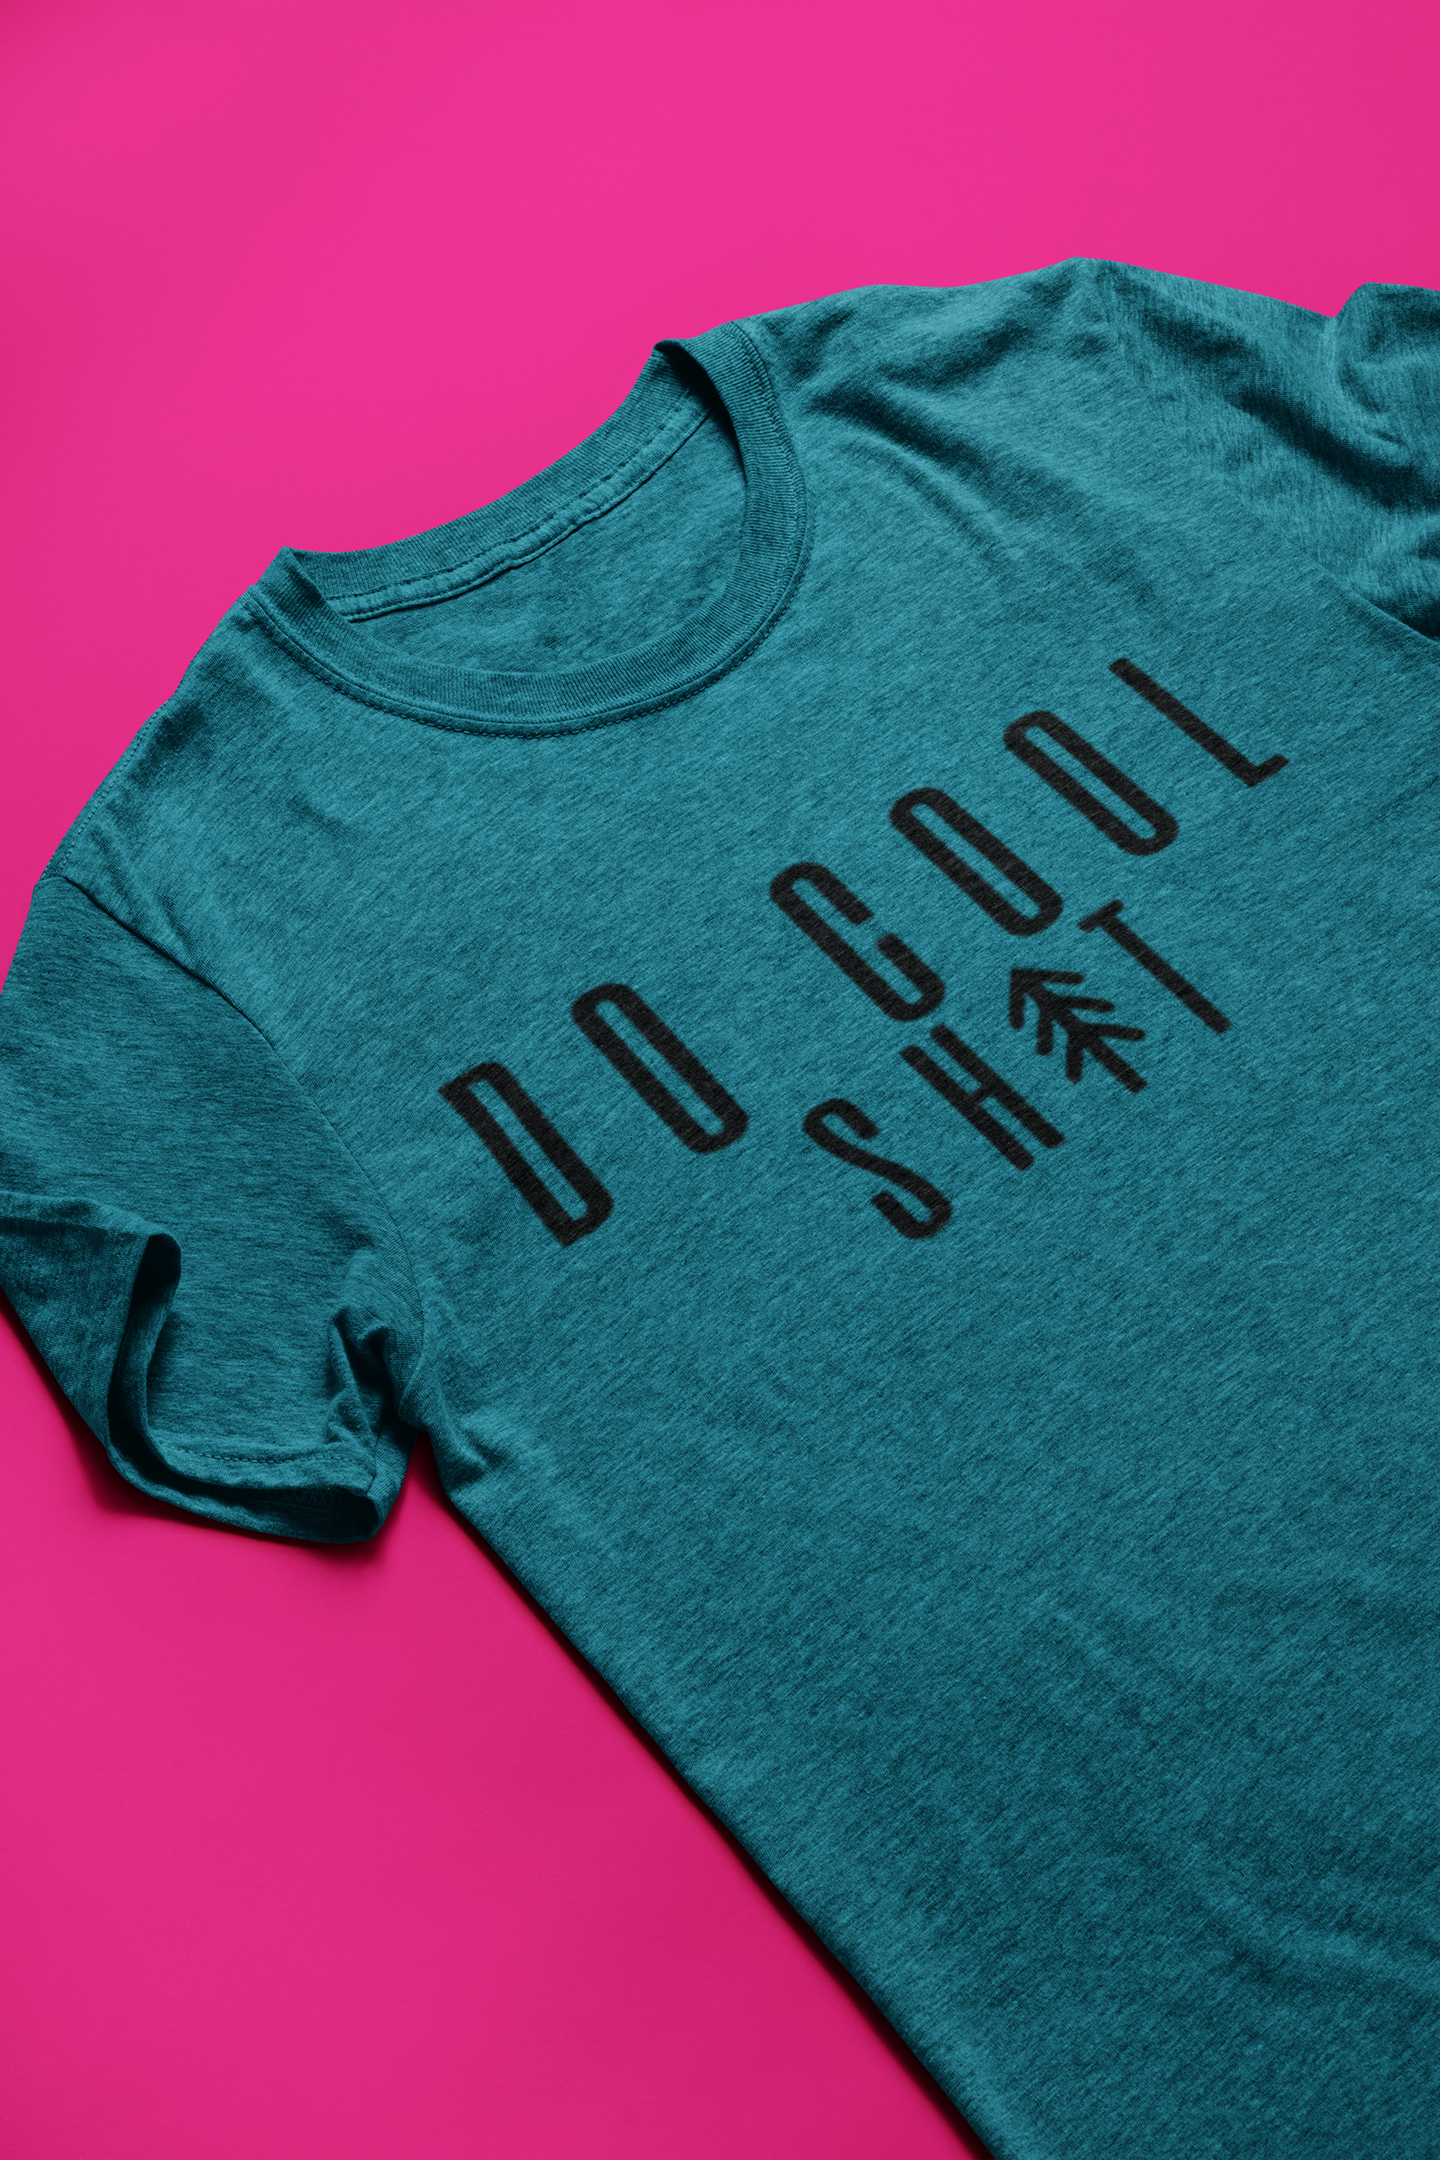 Do Cool Sh^t T-Shirt